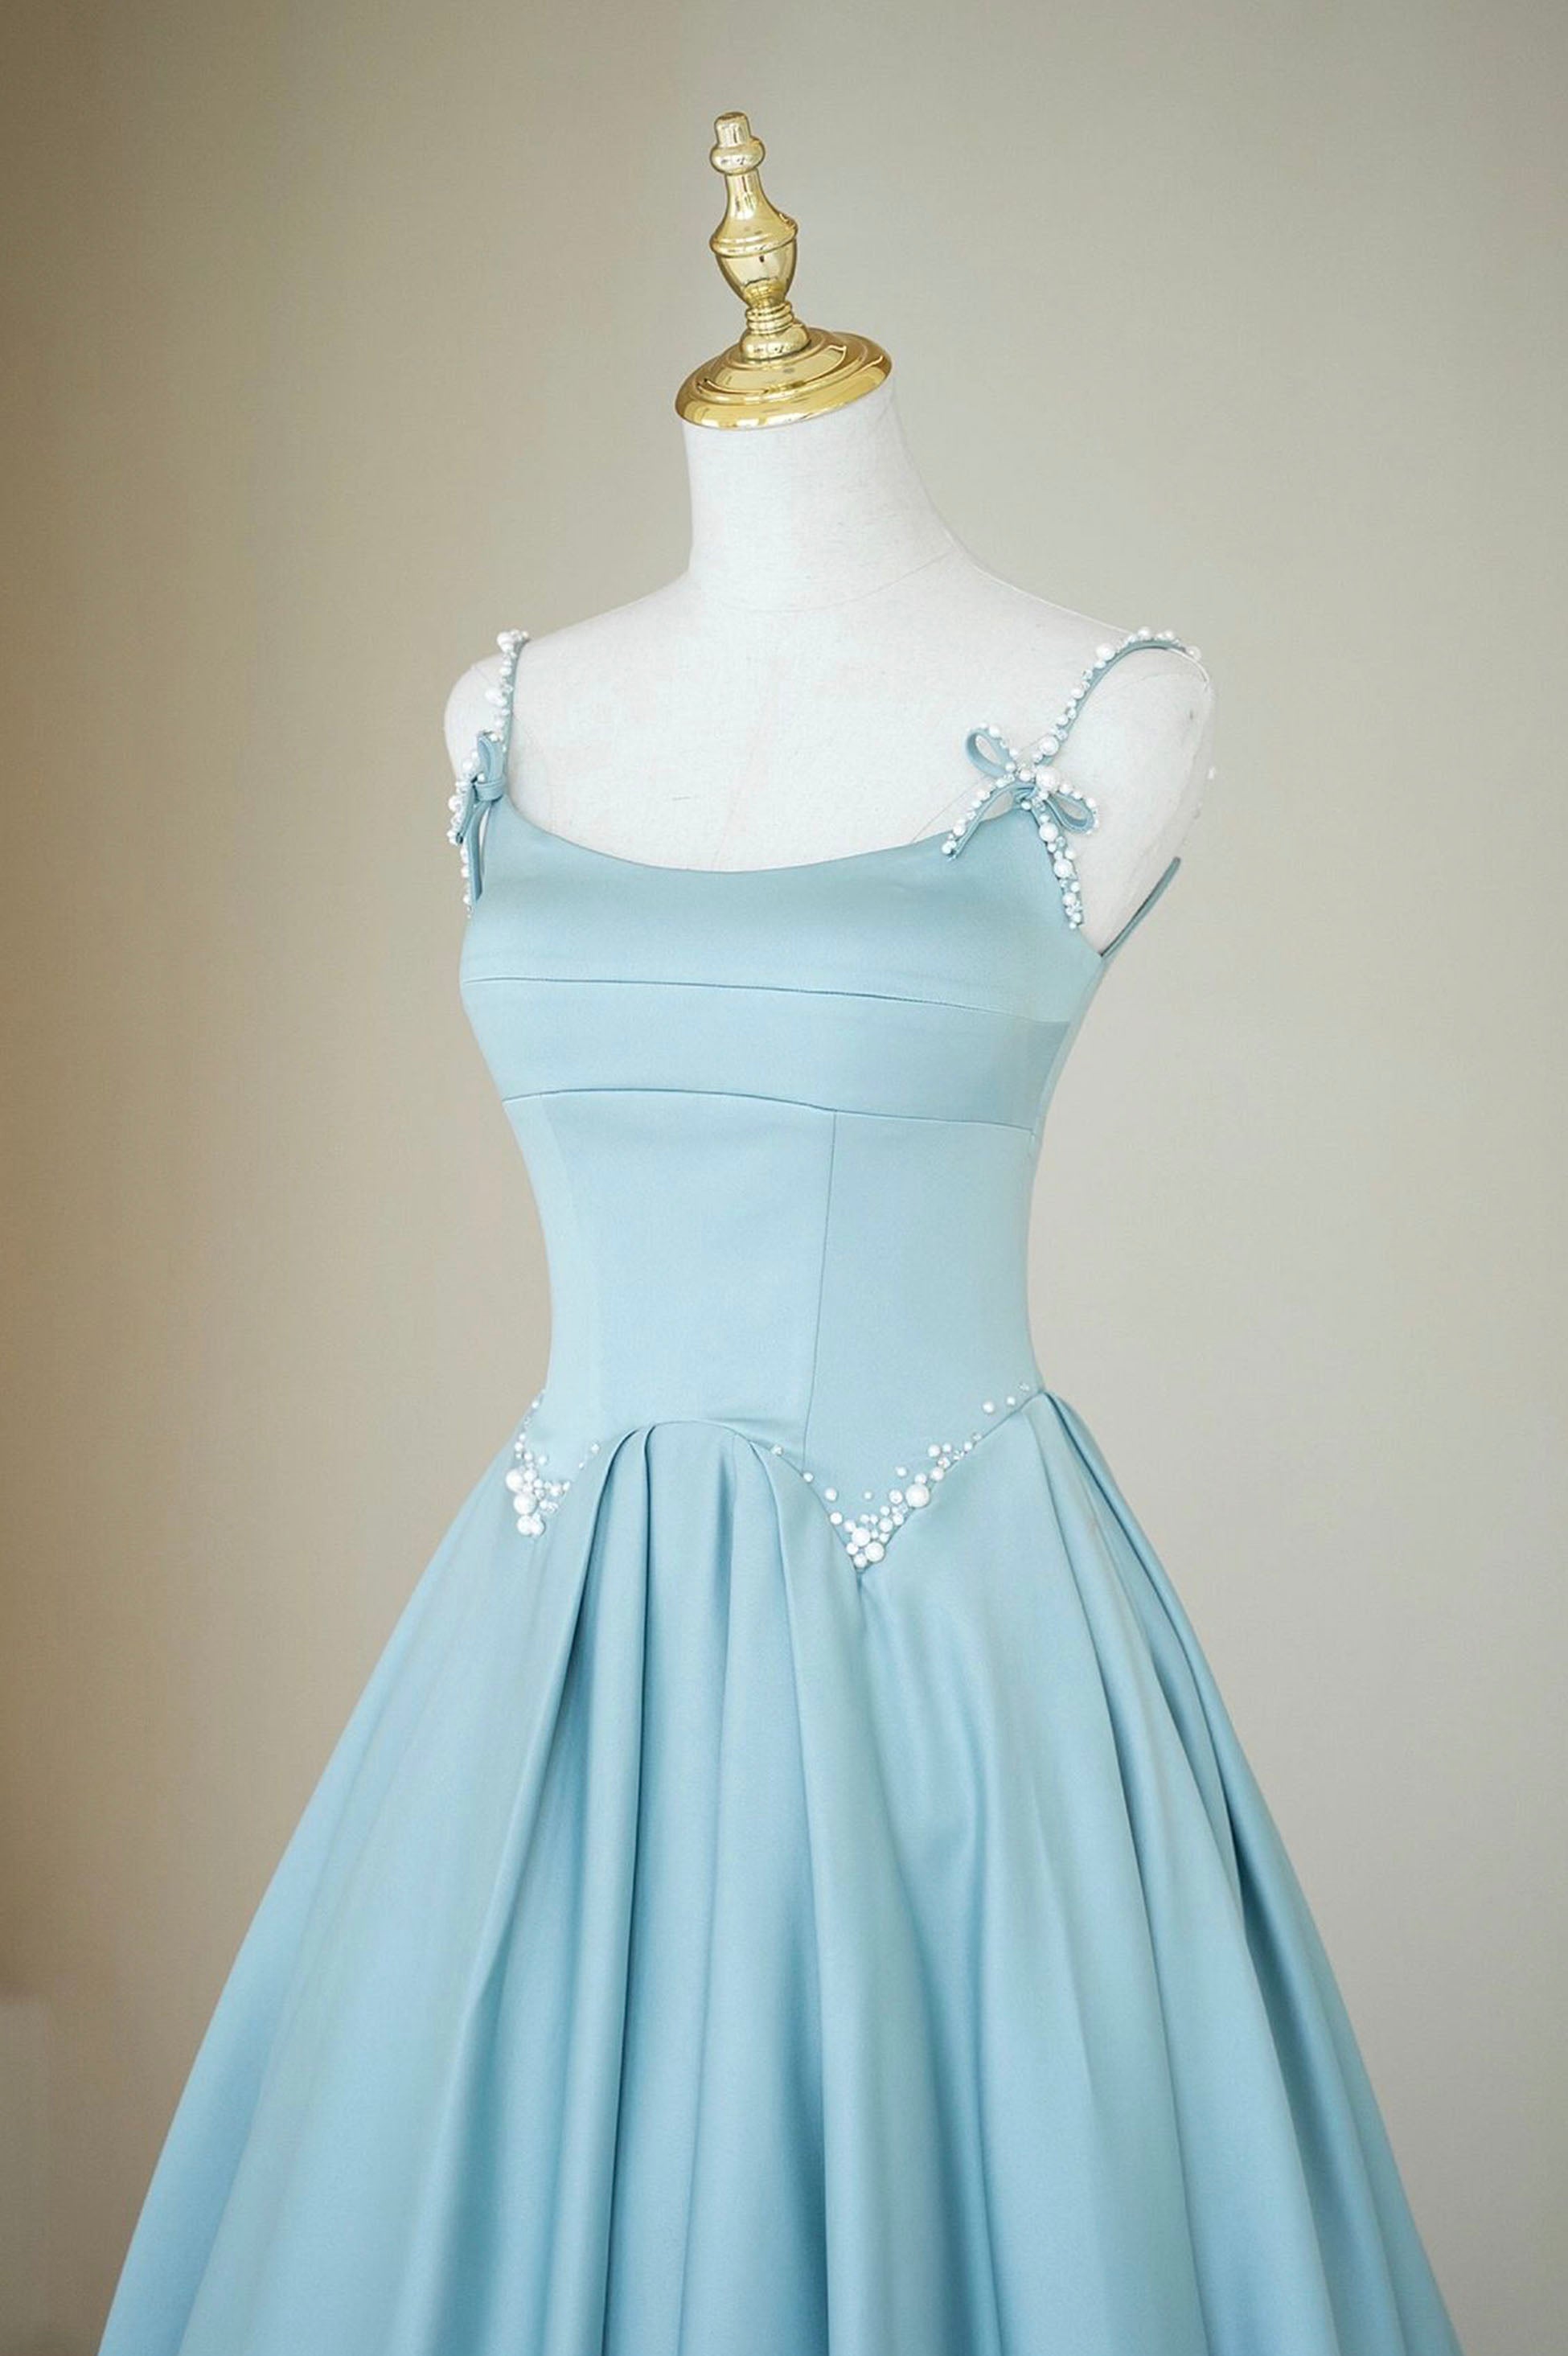 Party Dress Patterns, Blue Satin Long A-Line Prom Dress, Spaghetti Straps Evening Dress